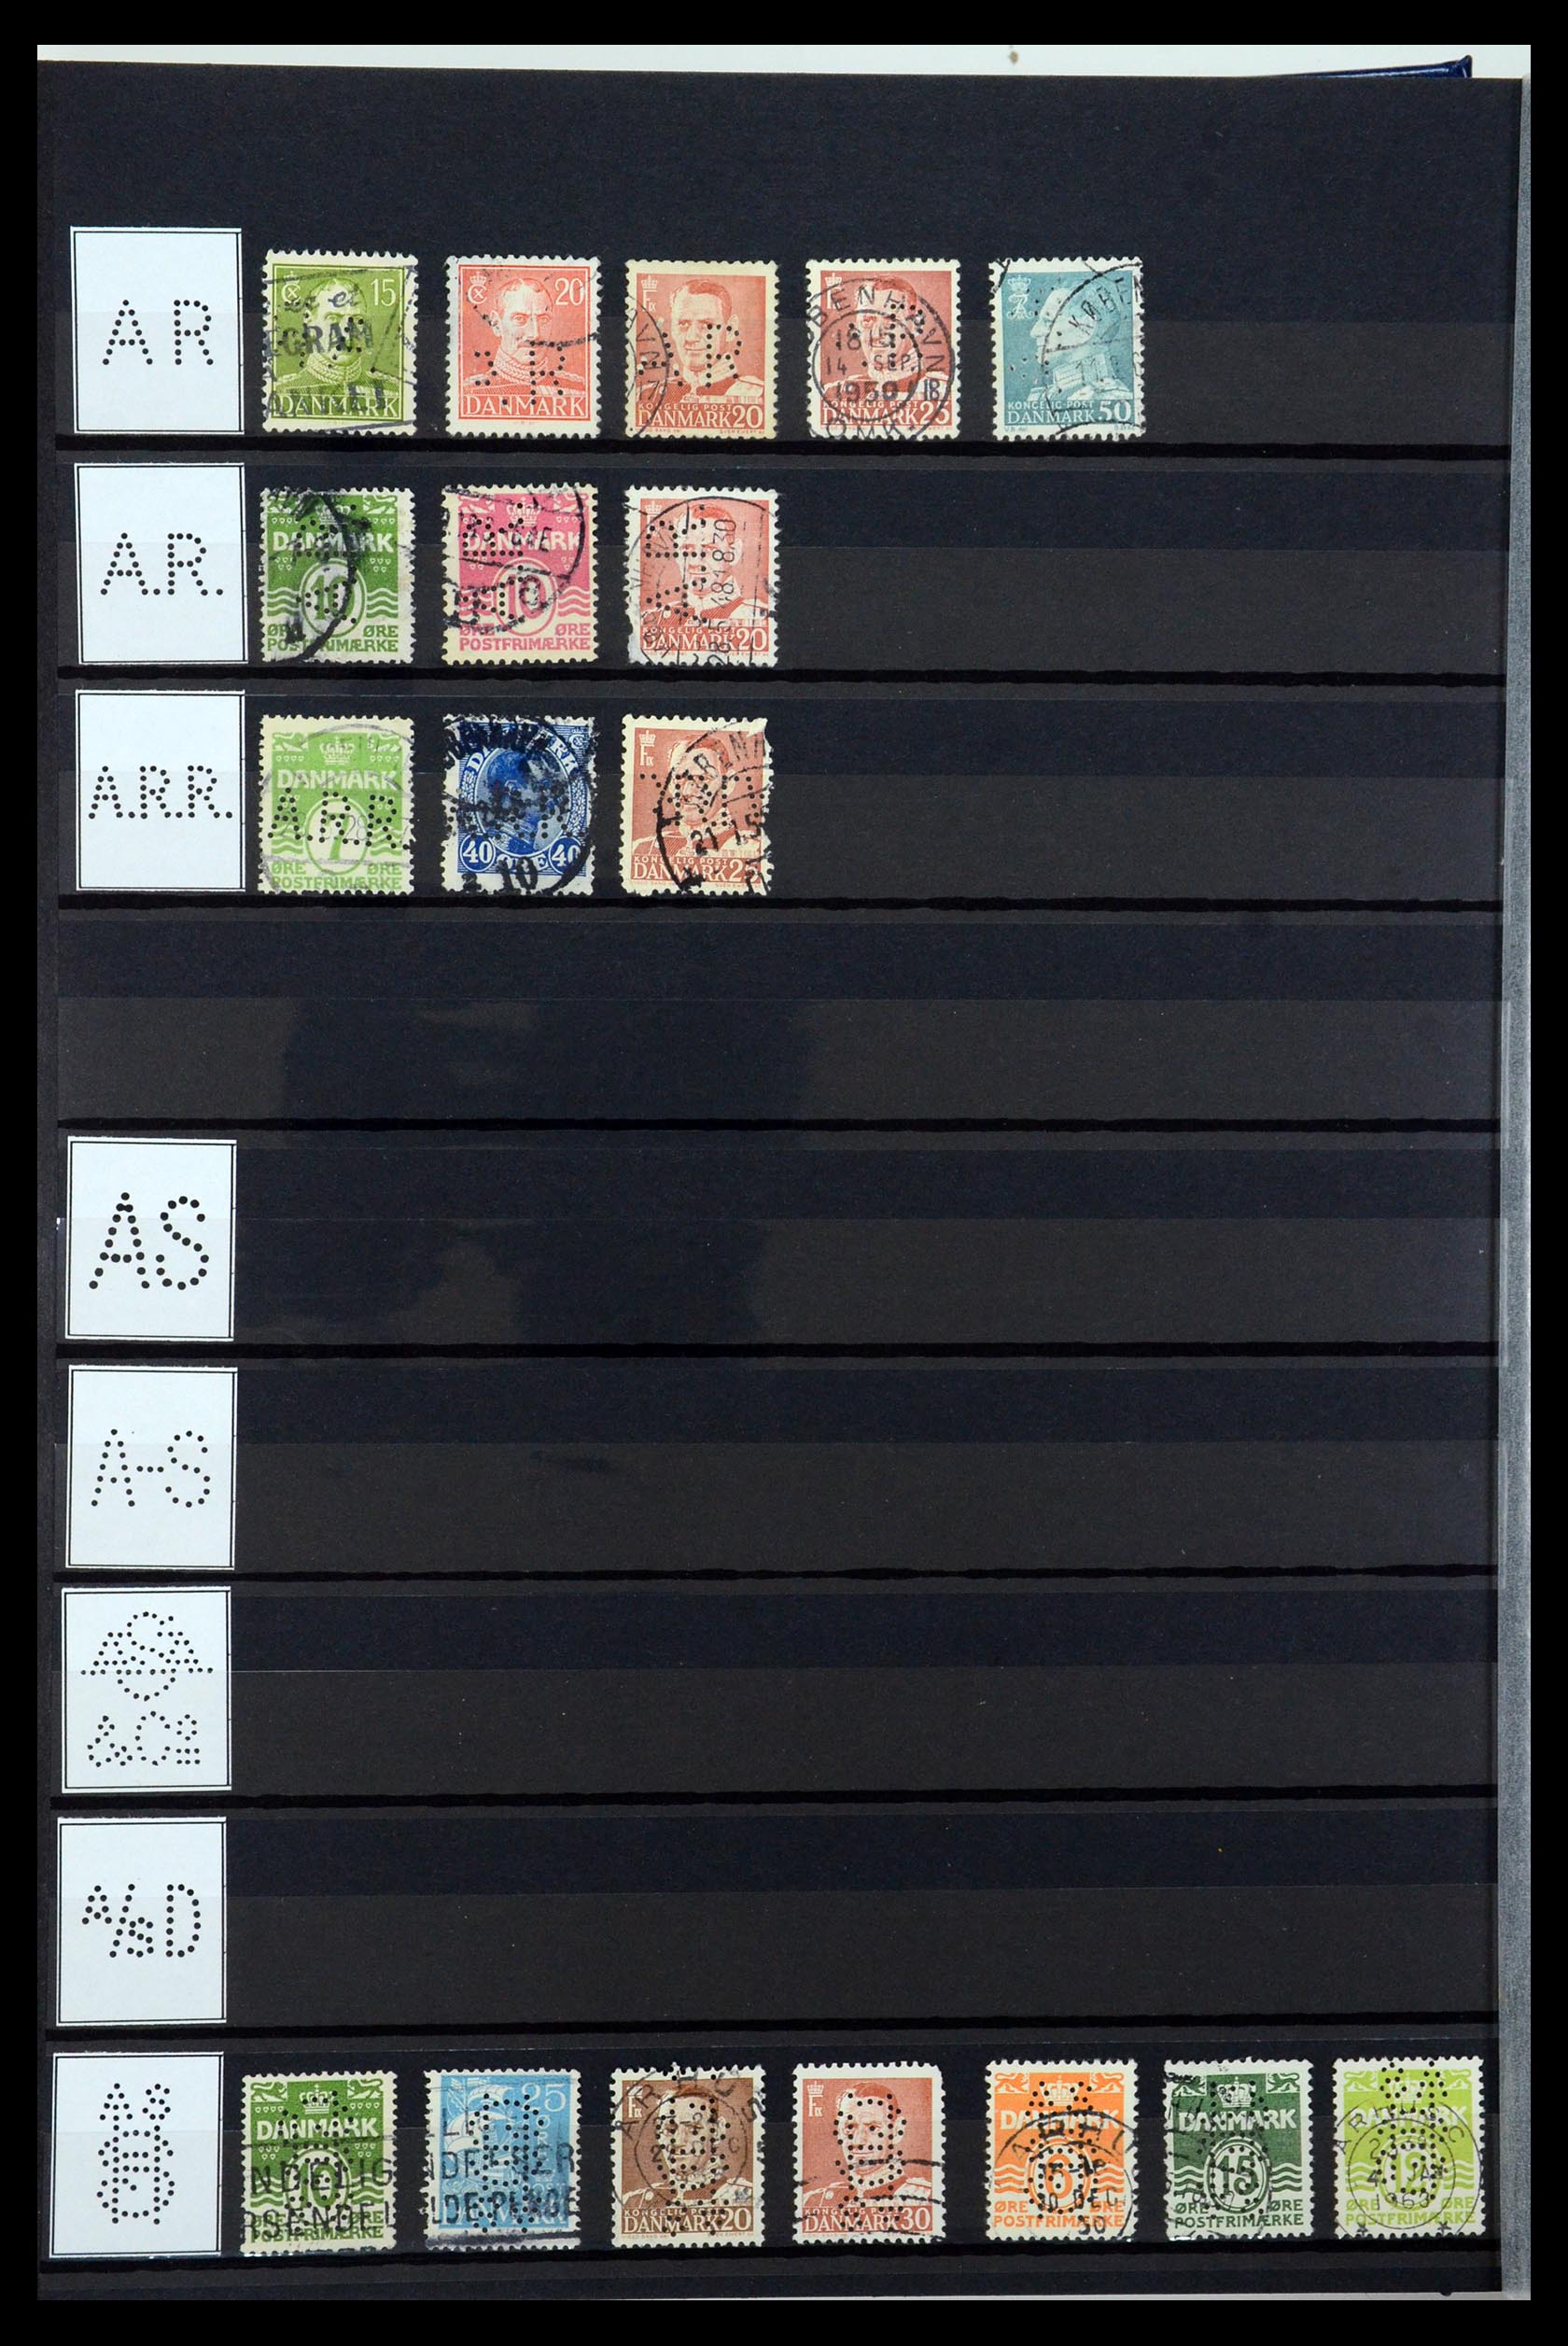 36396 010 - Stamp collection 36396 Denmark perfins.